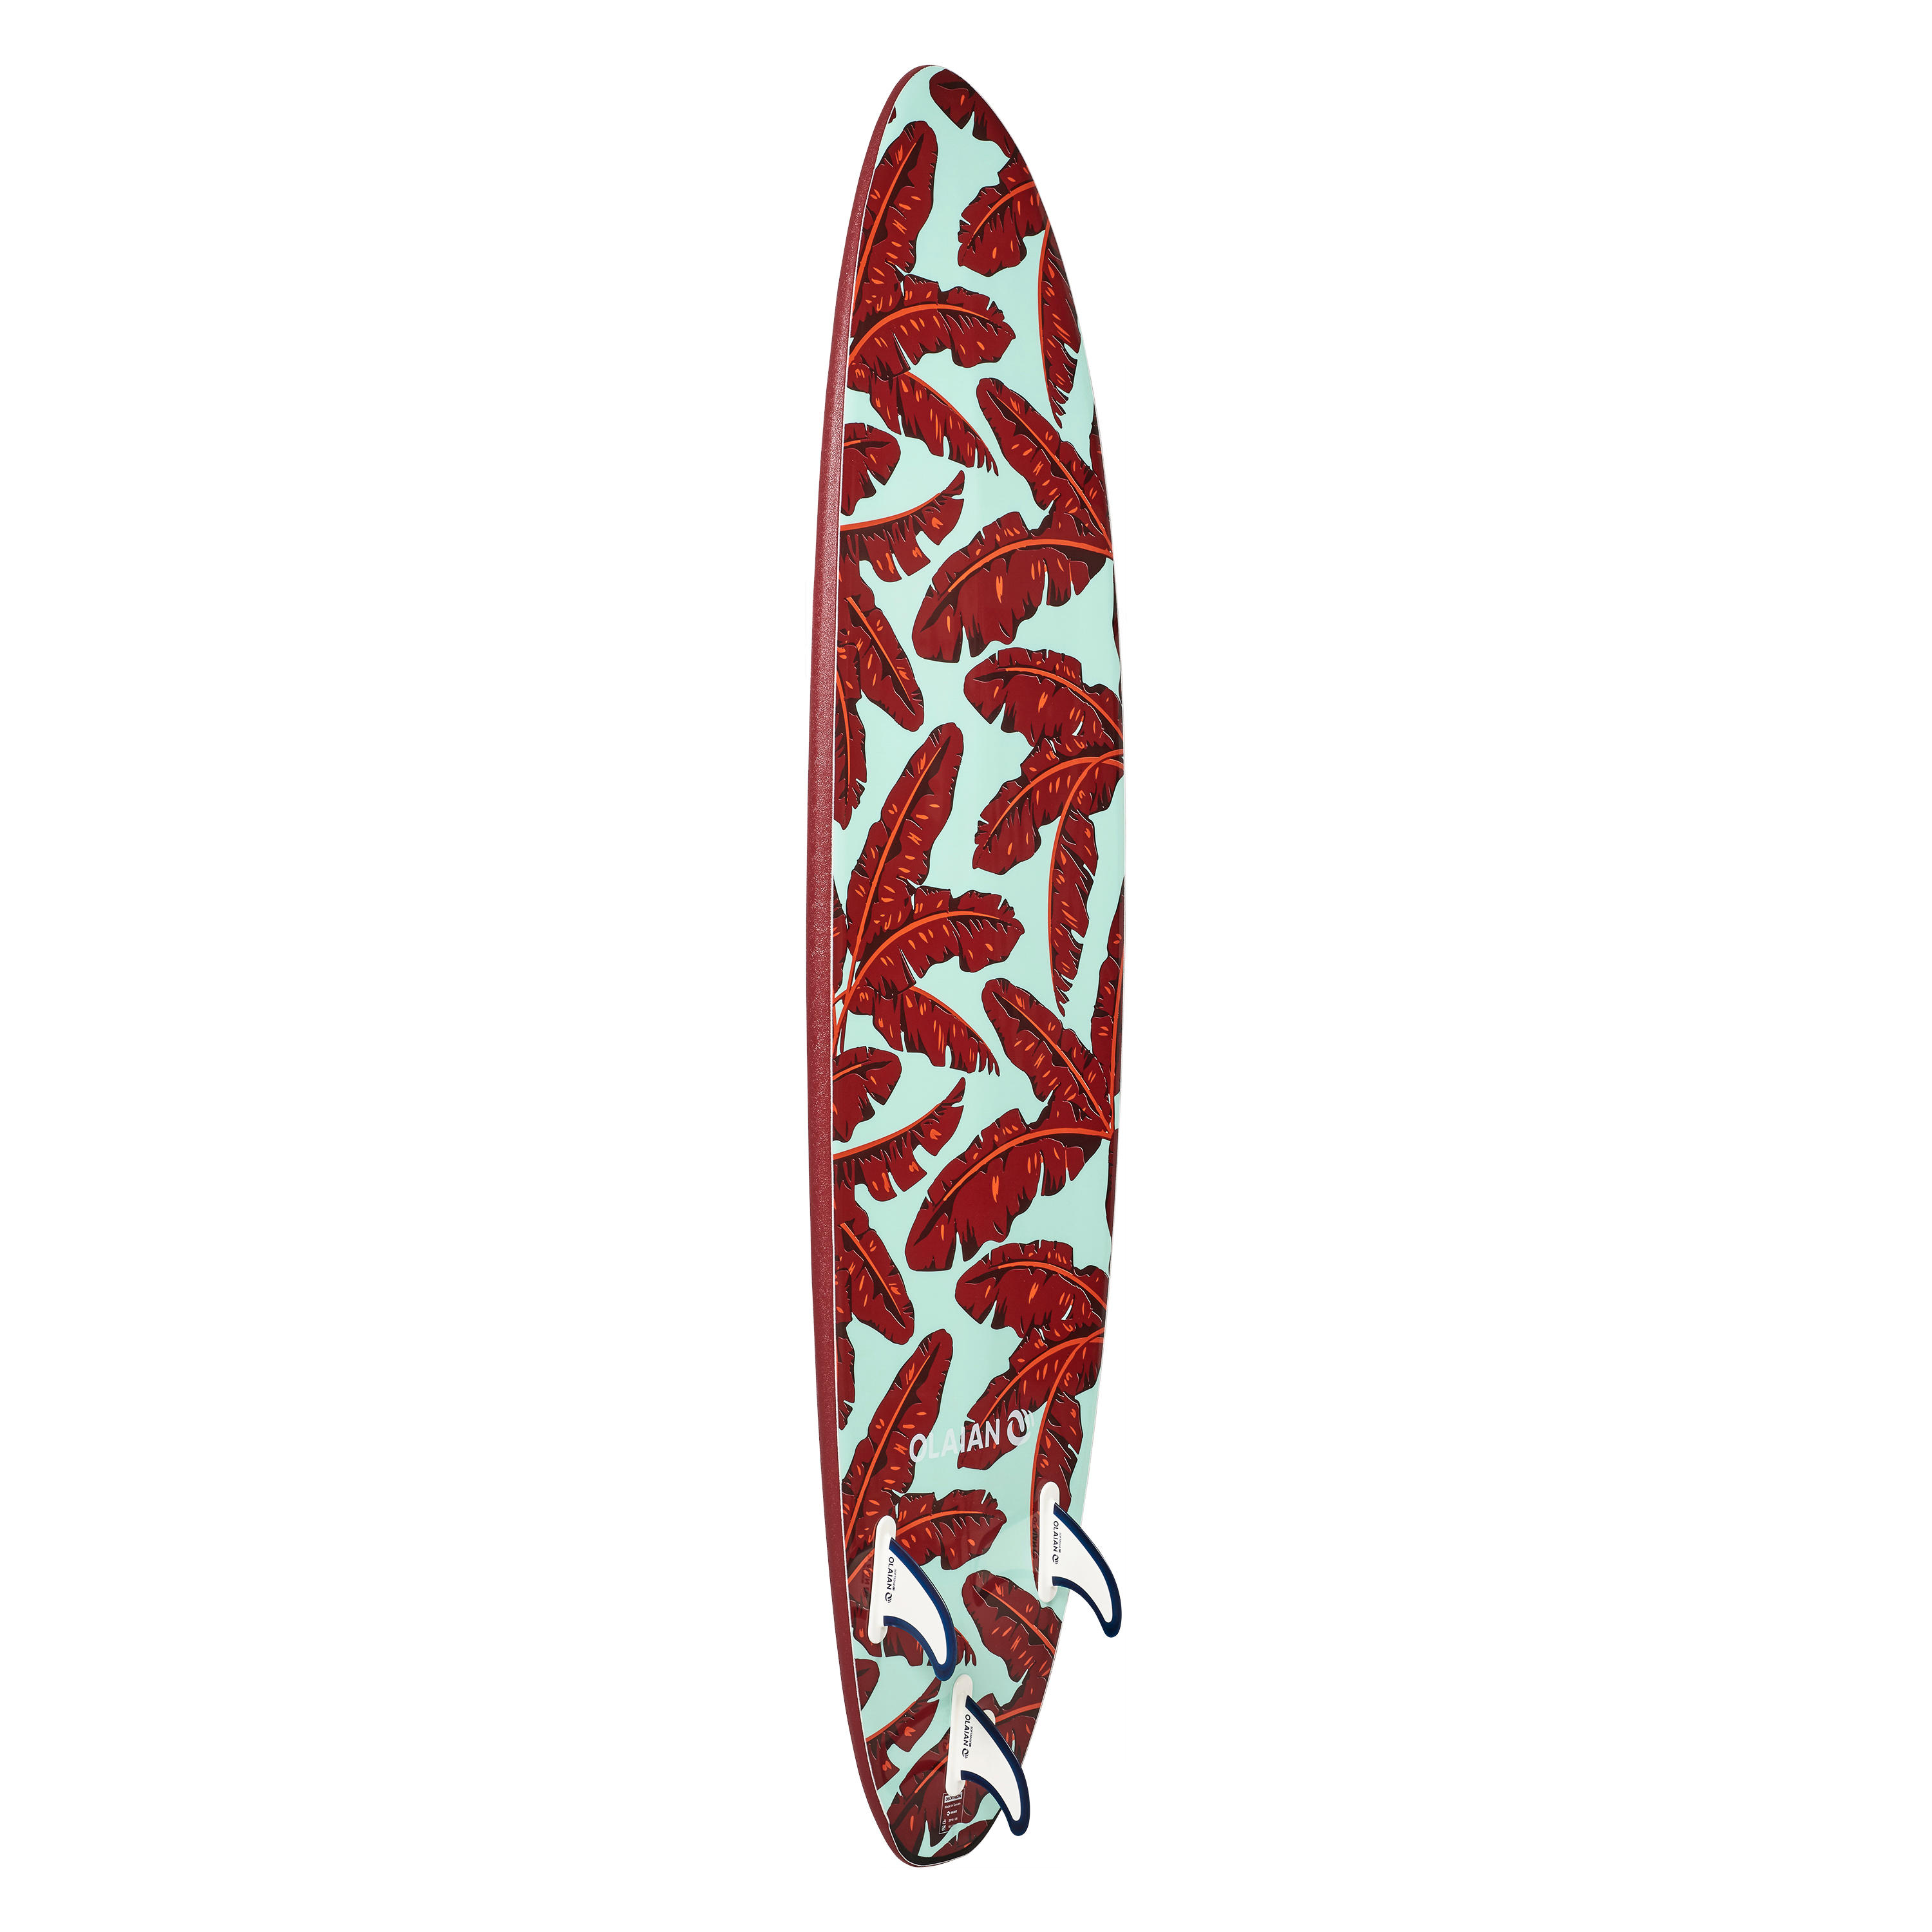 7' Foam Surfboard - 500Includes 1 leash and 3 fins. - OLAIAN